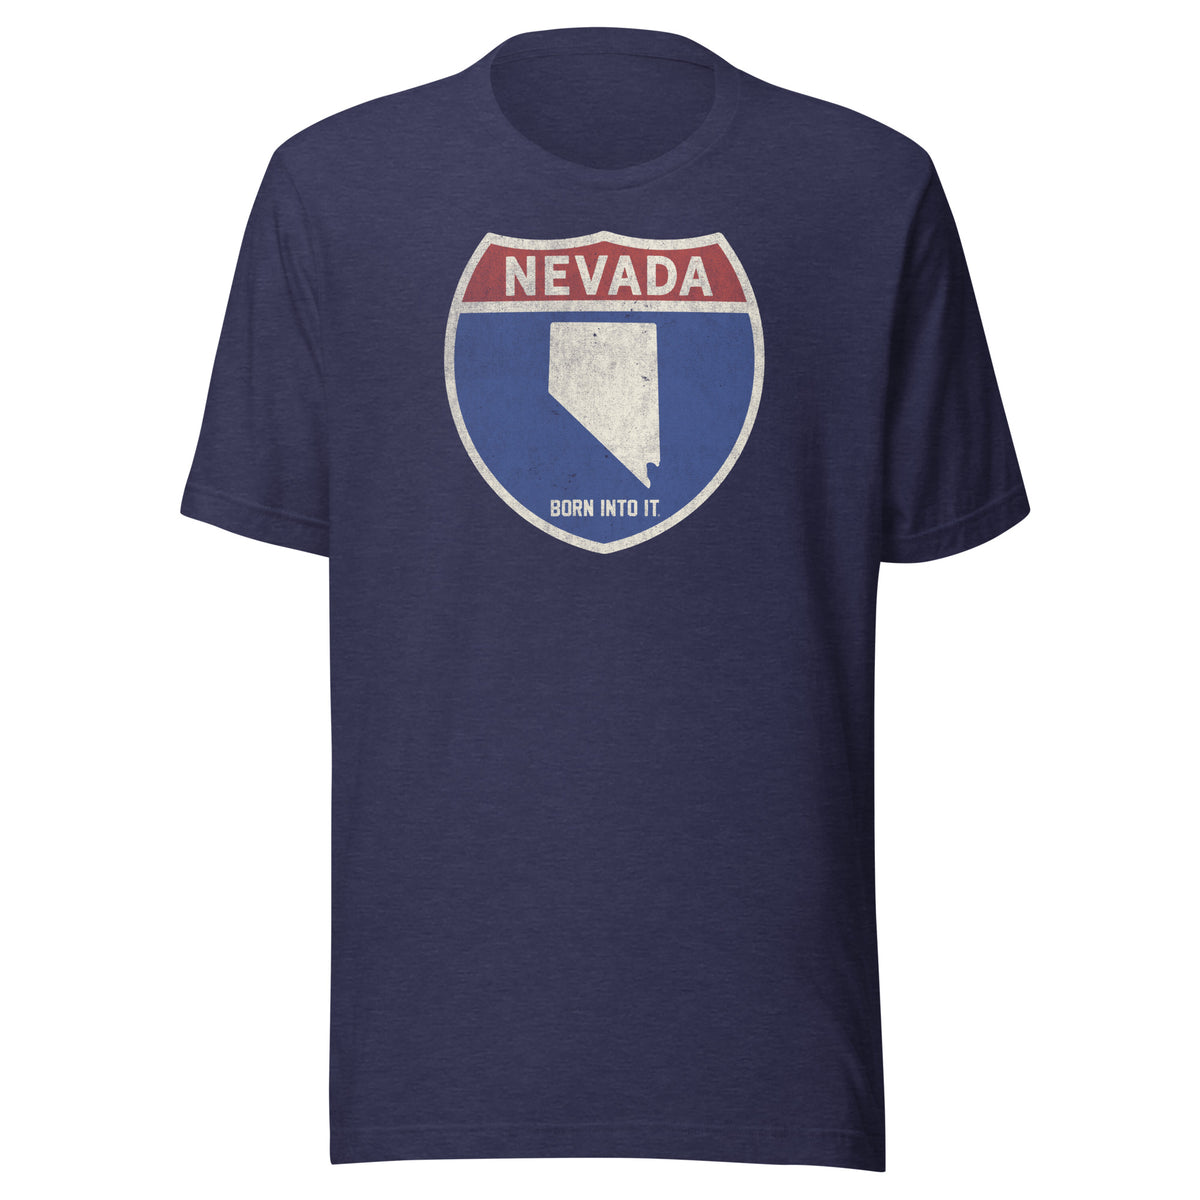 Nevada Road Sign Unisex t-shirt